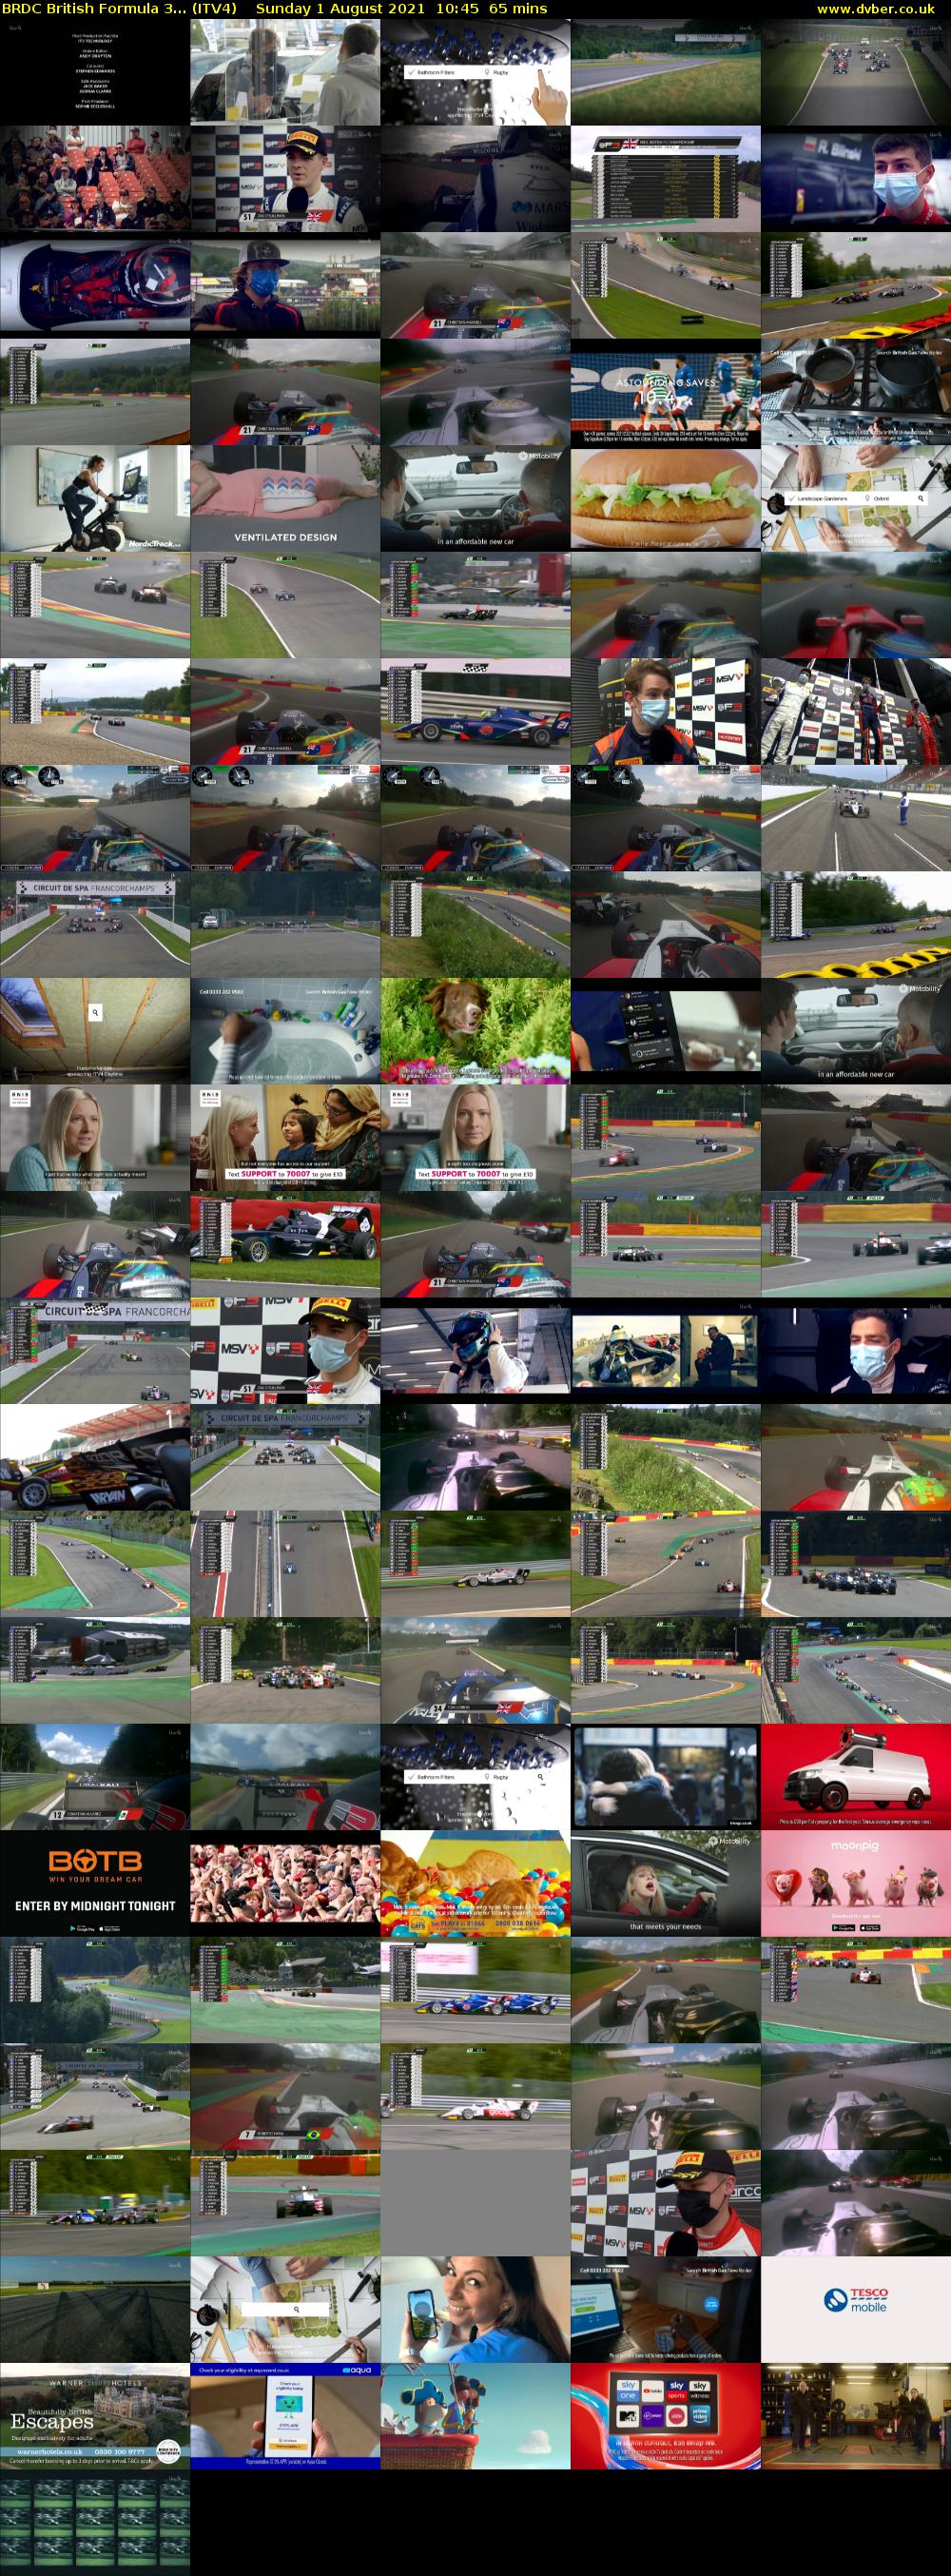 BRDC British Formula 3... (ITV4) Sunday 1 August 2021 10:45 - 11:50